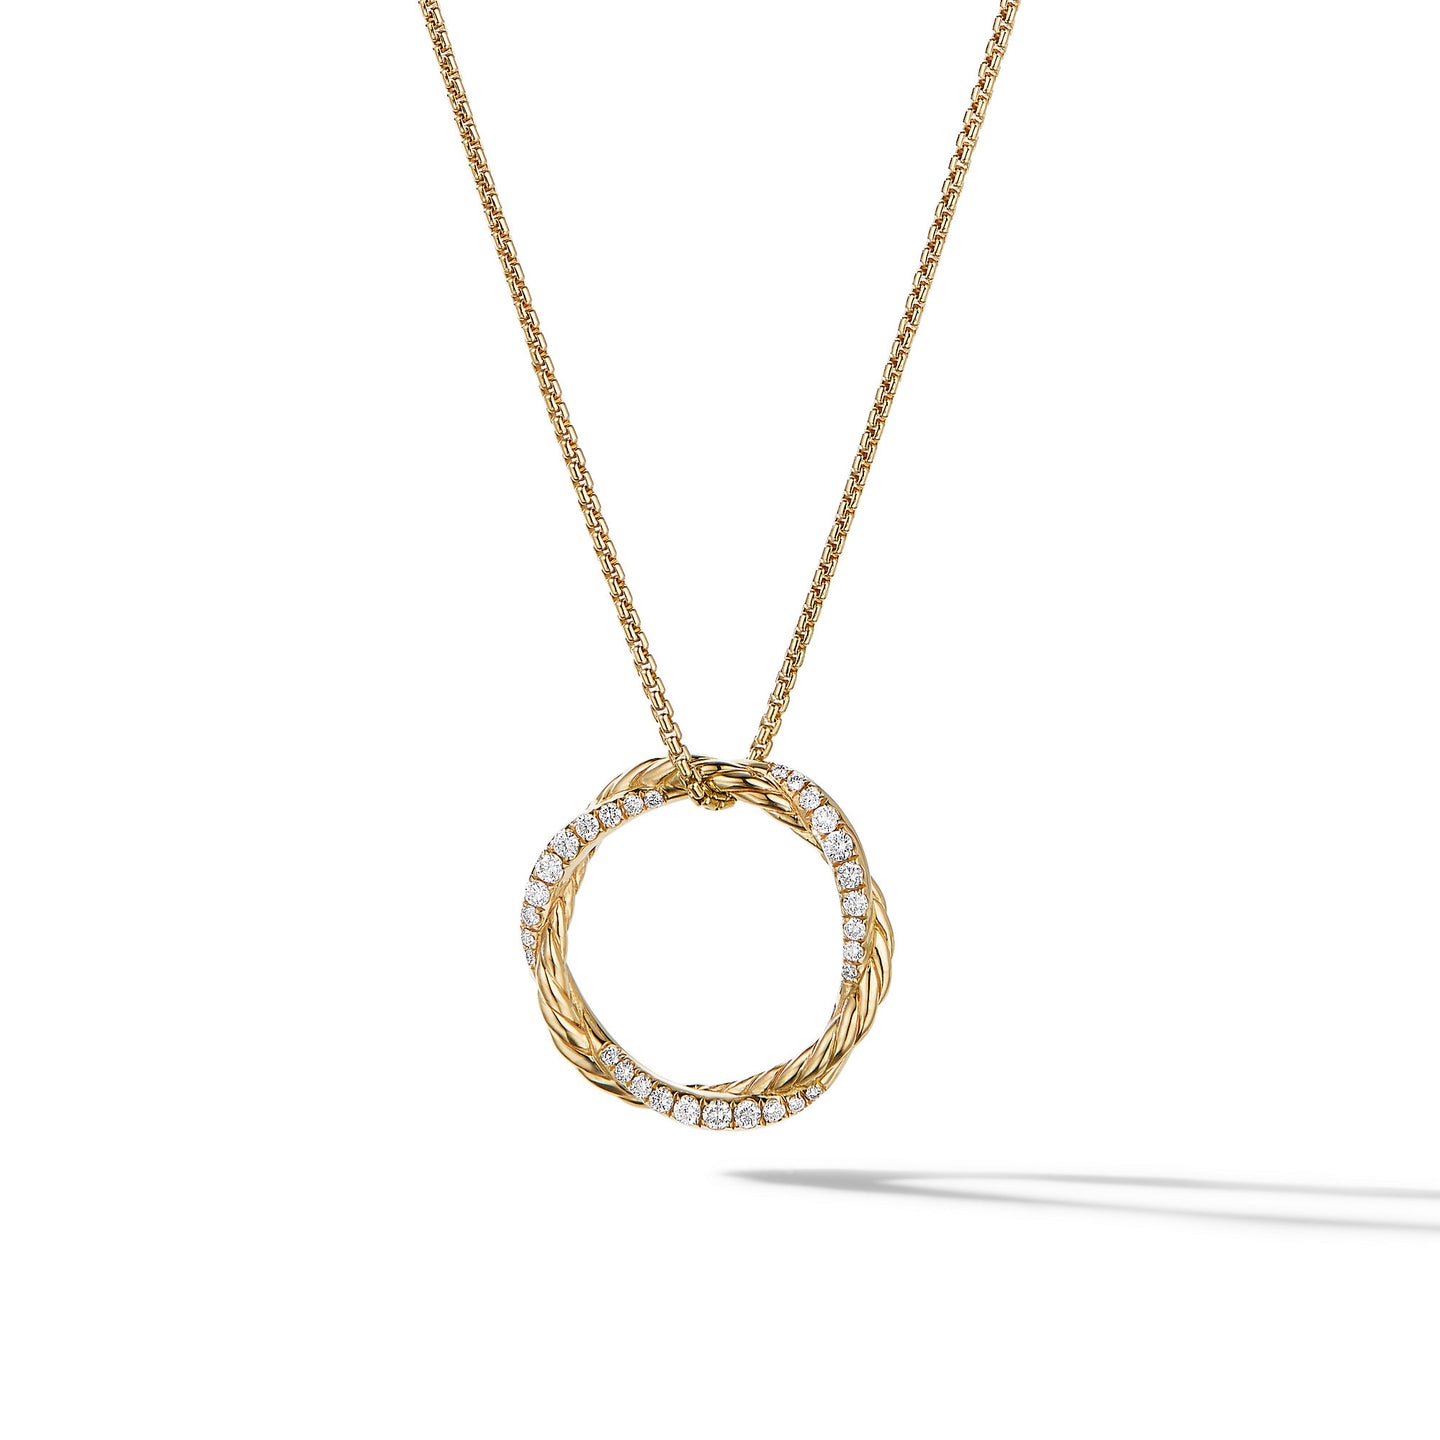 David Yurman Petite Infinity Necklace in 18K Yellow Gold with Pavé Diamonds